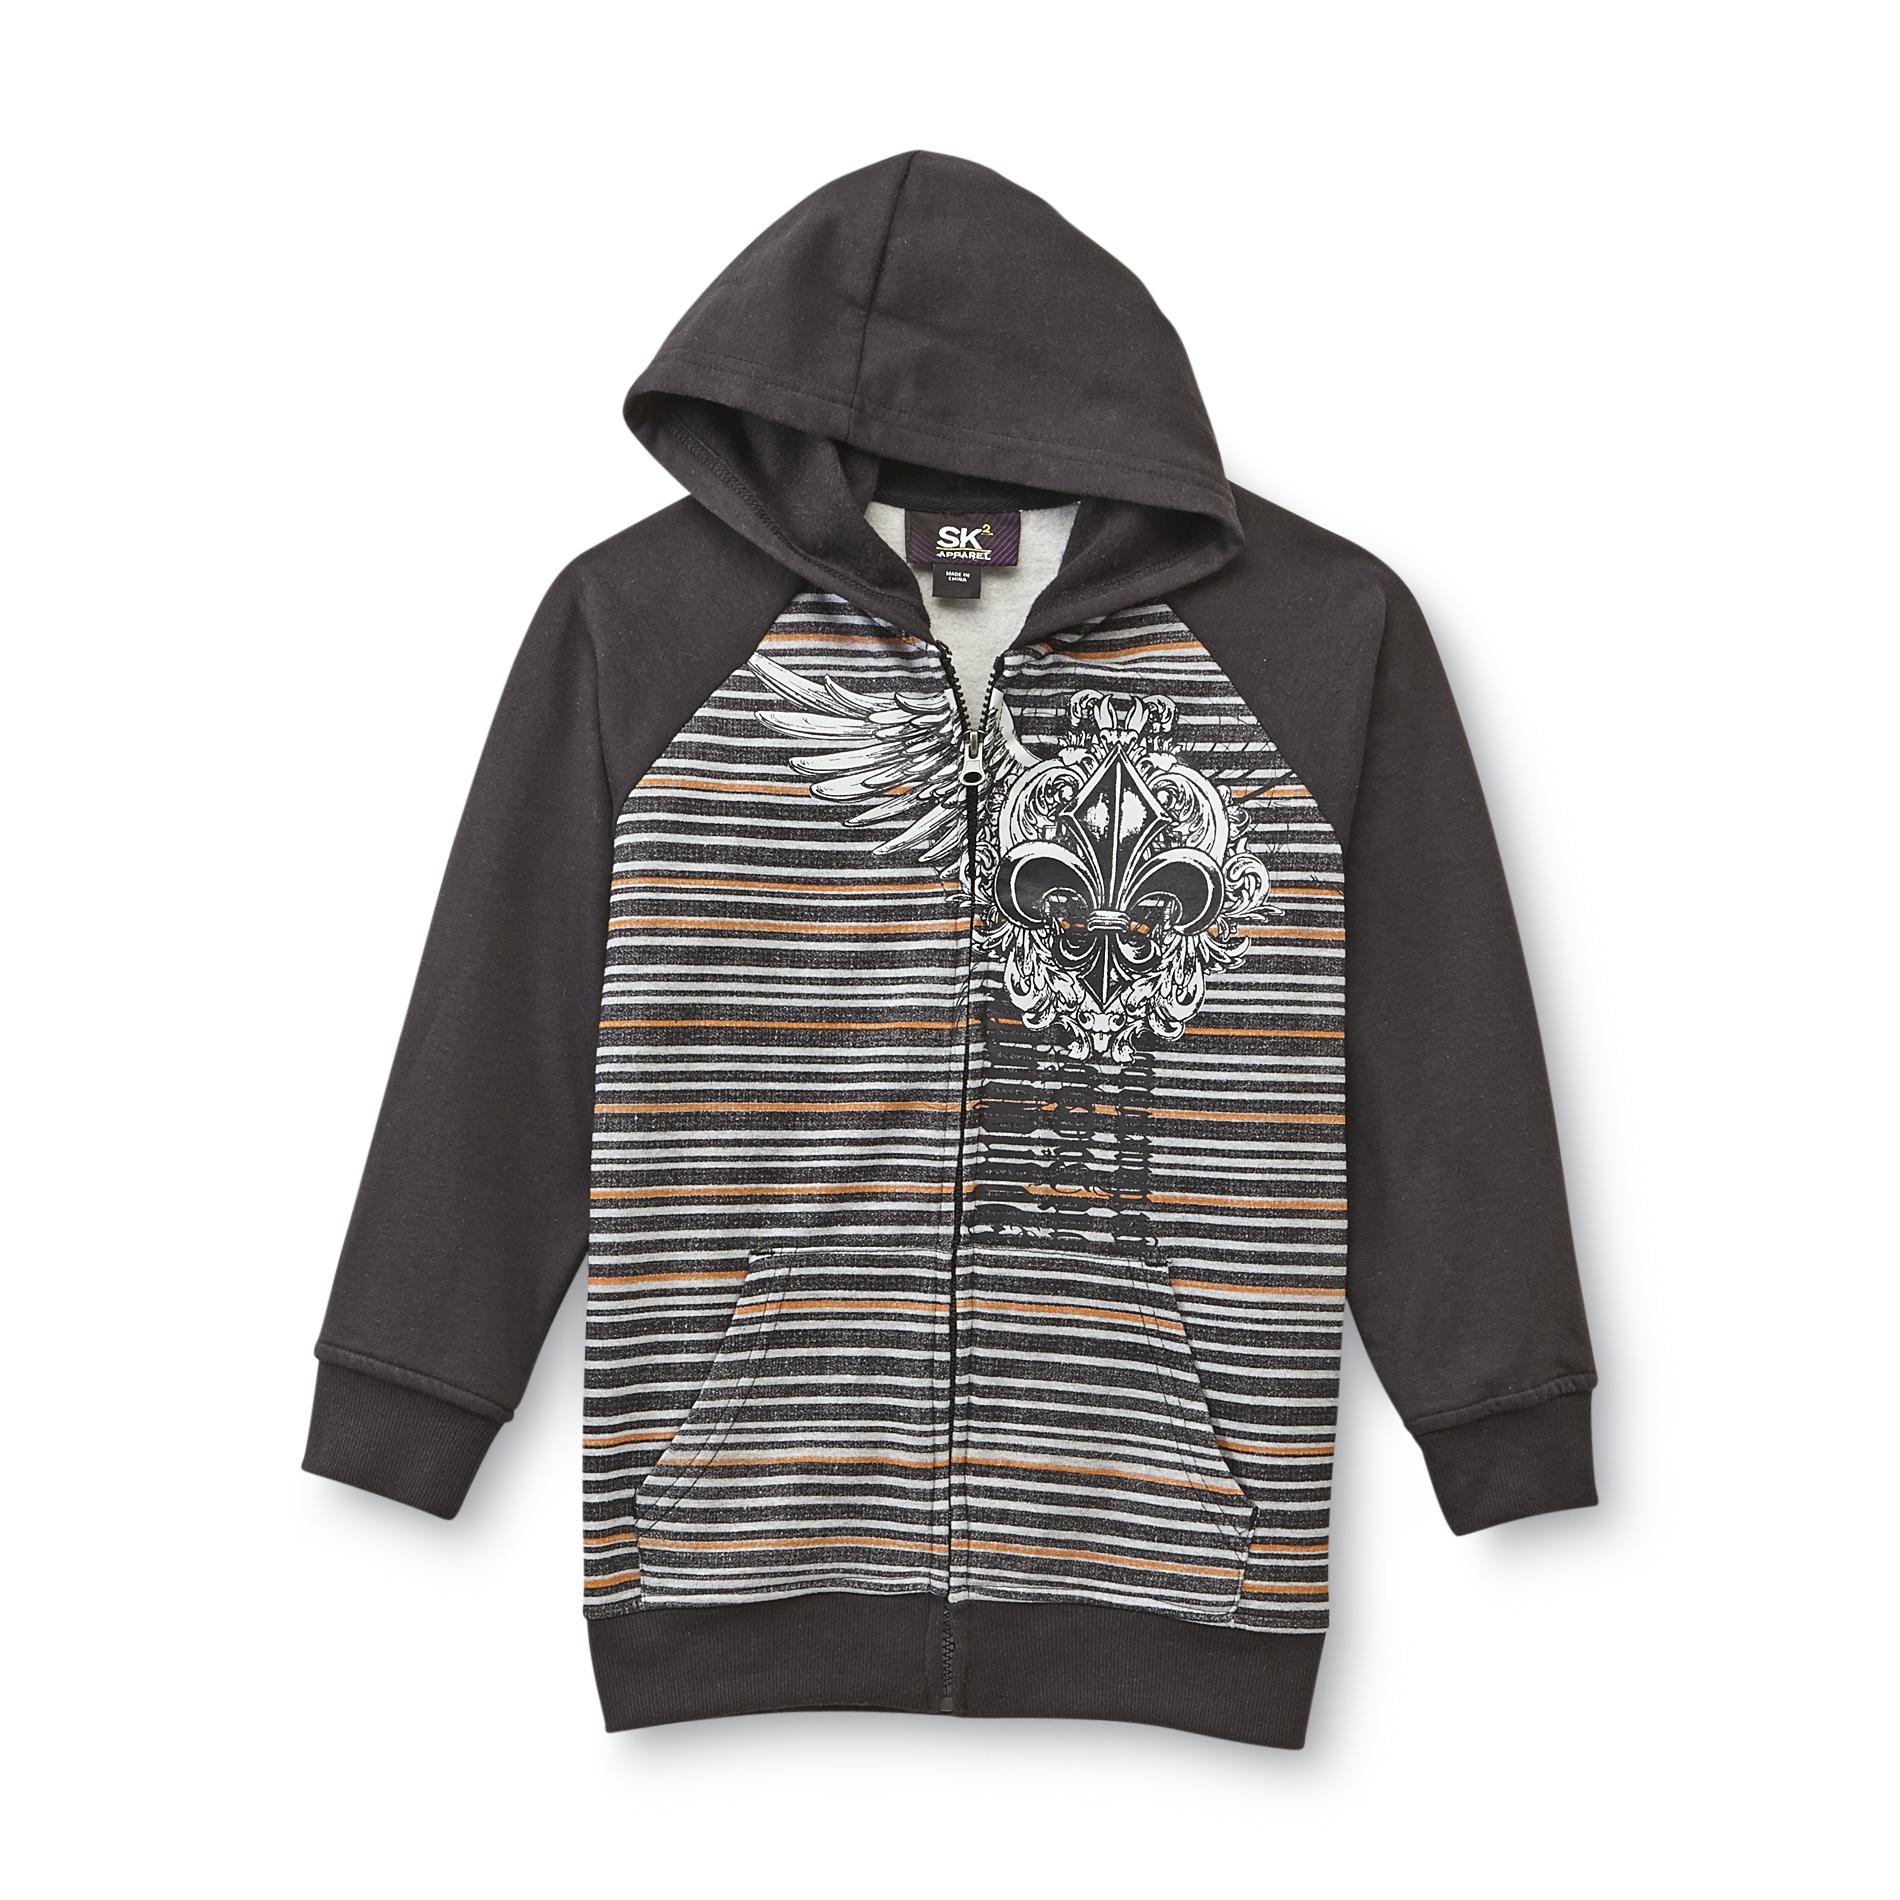 SK2 Boy's Graphic Fleece Hoodie Jacket - Fleur-de-lis & Striped